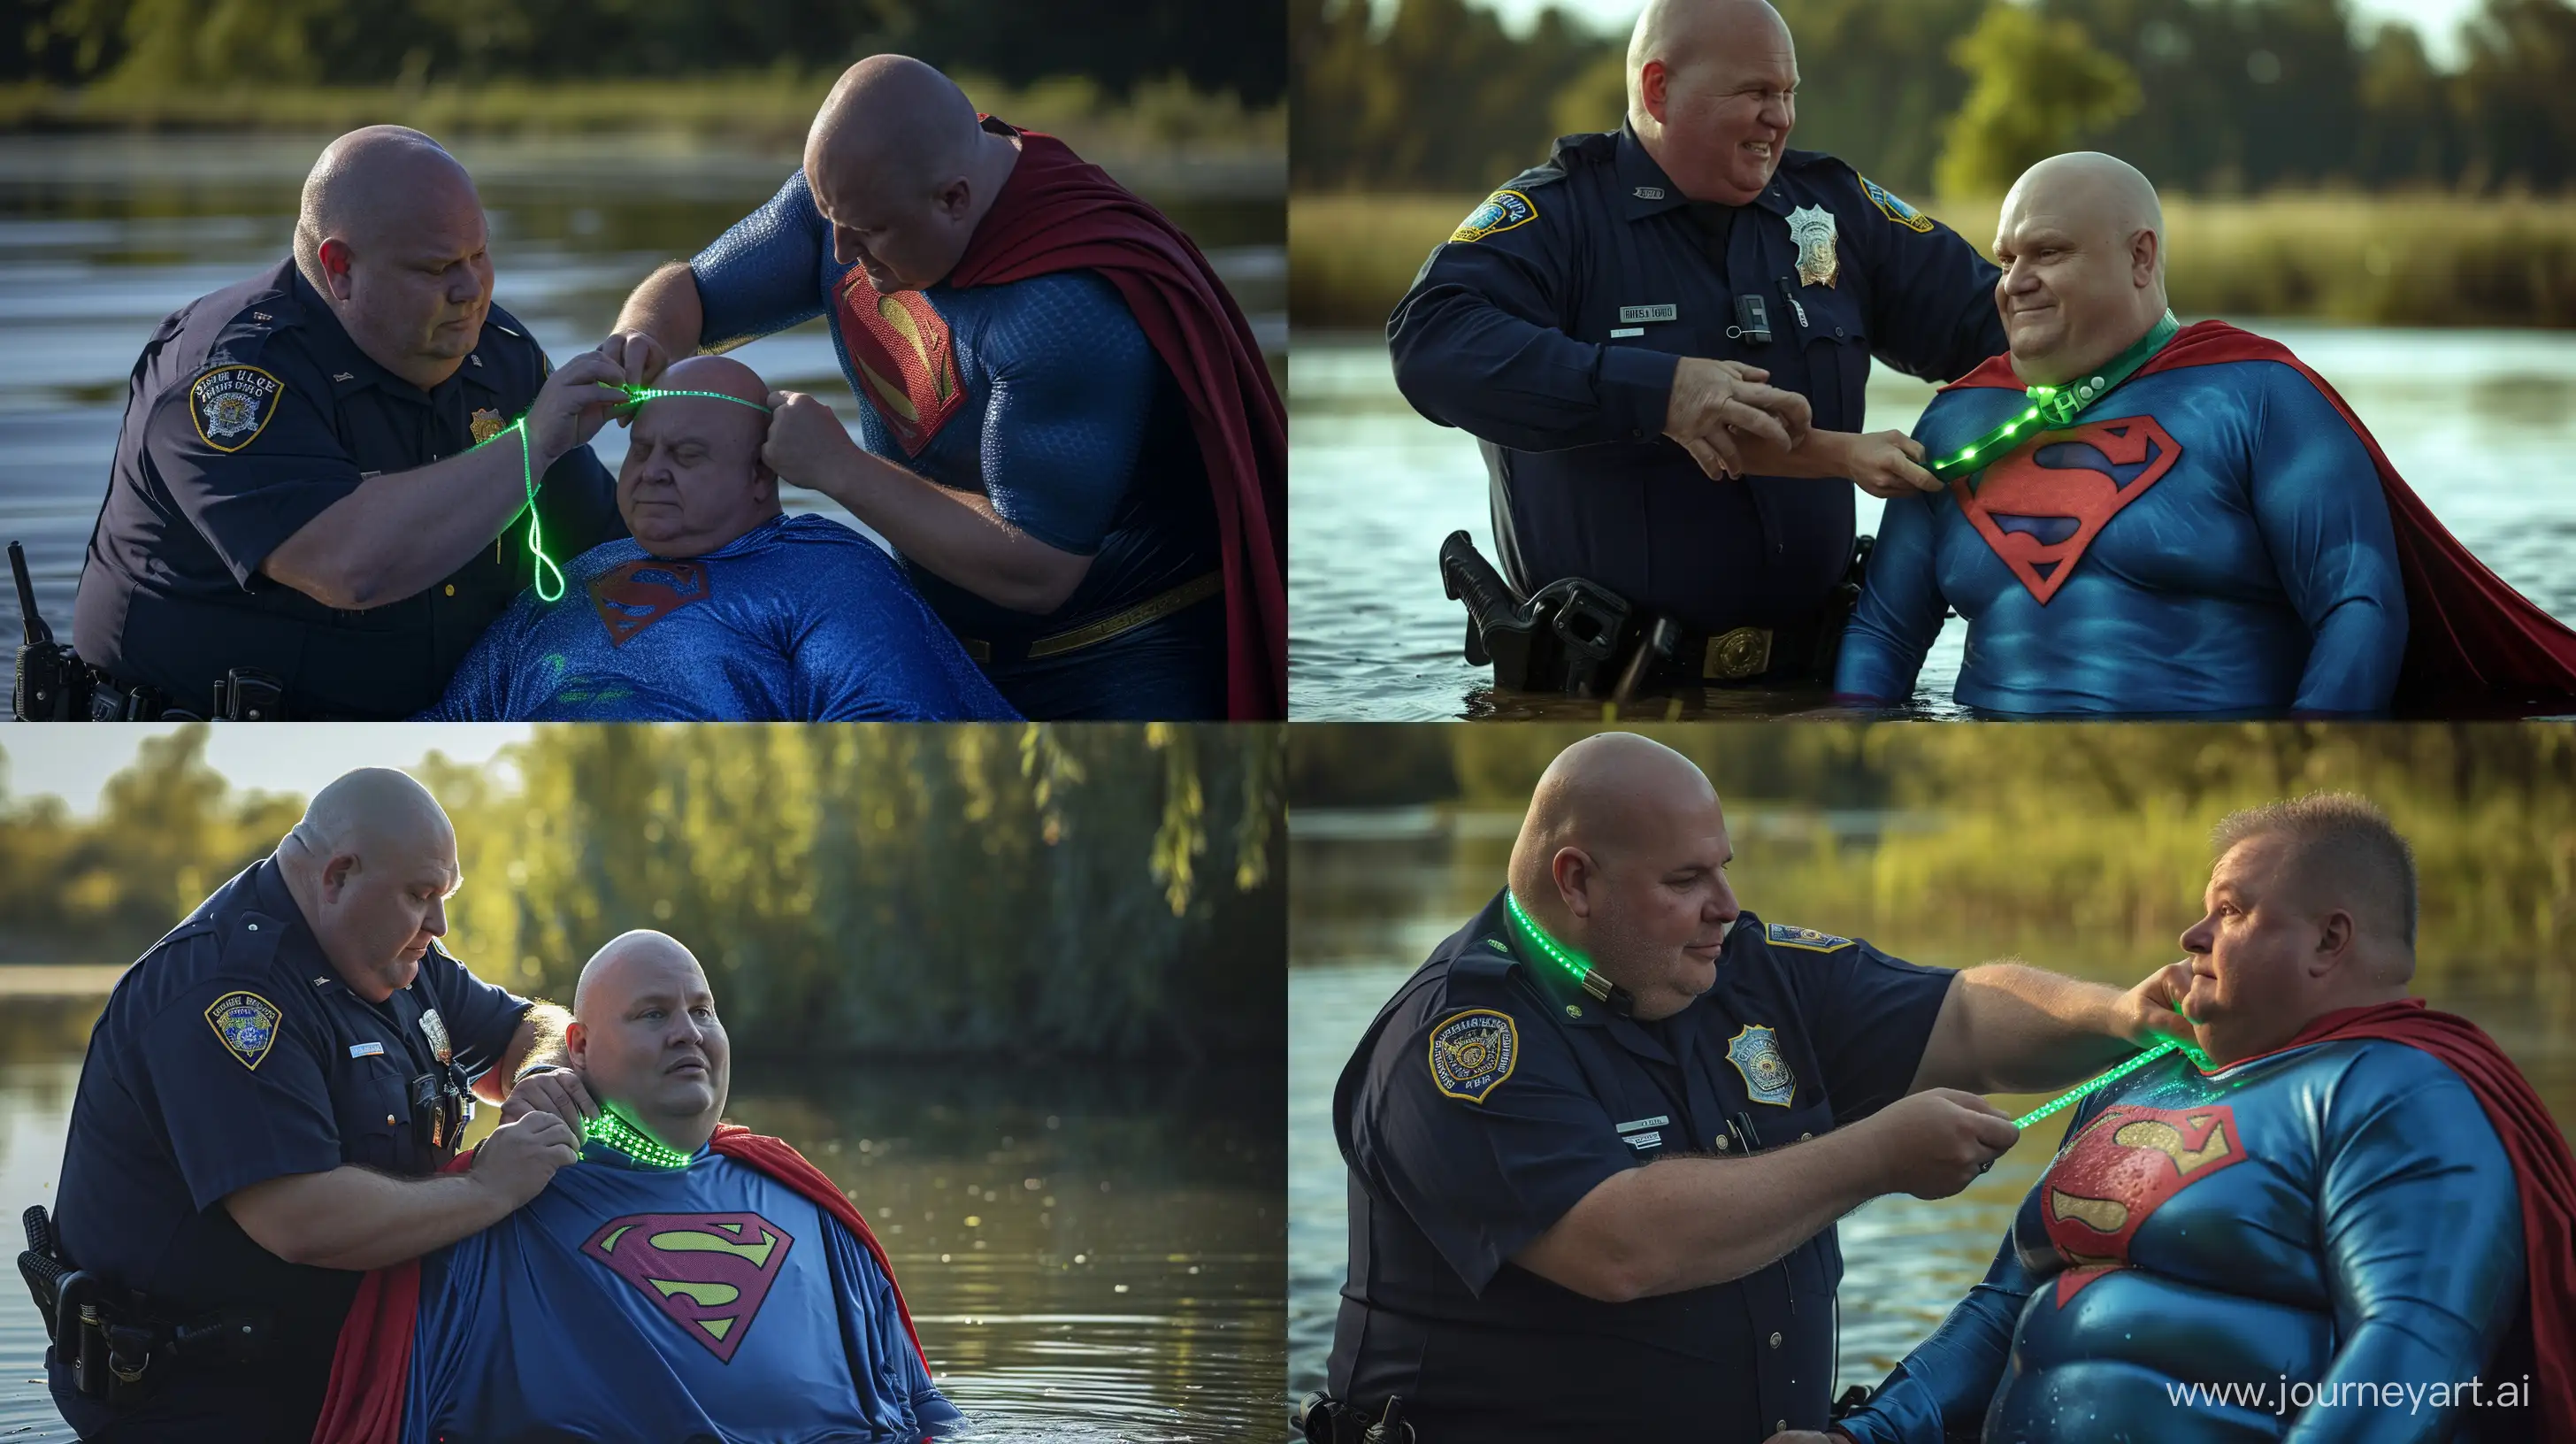 Elderly-Policeman-Securing-Glowing-Collar-on-Superman-in-Water